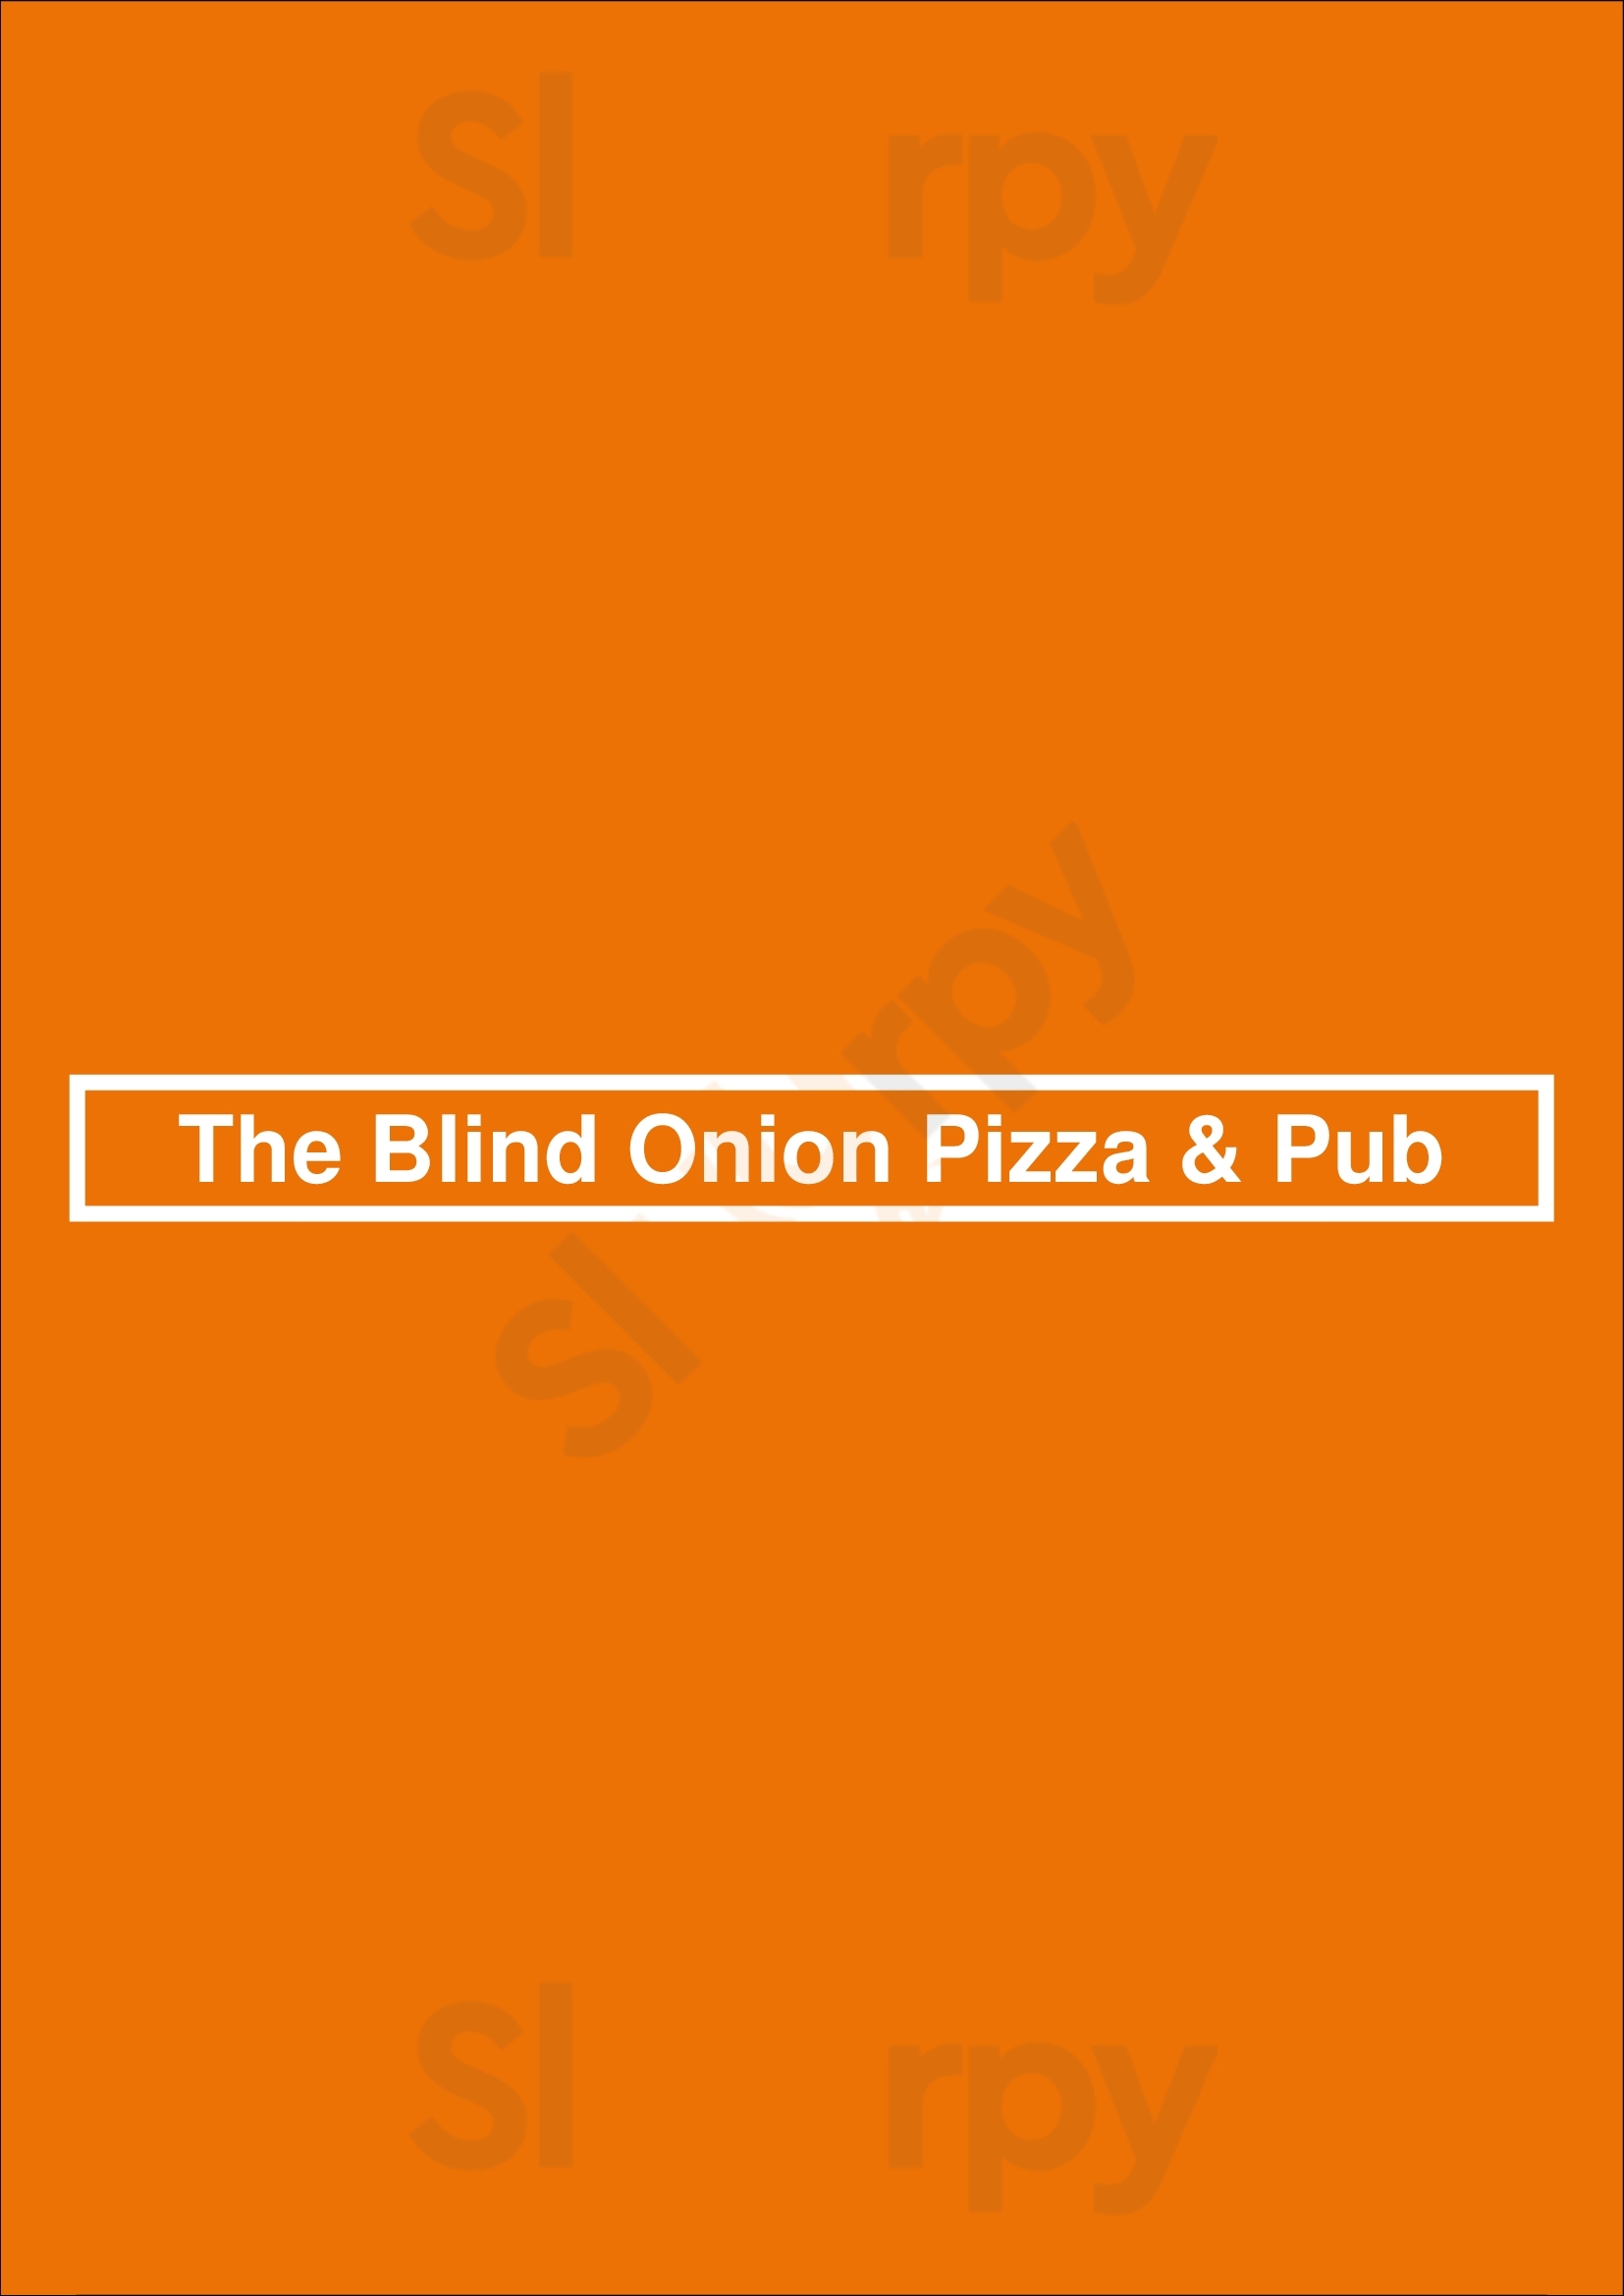 The Blind Onion Pizza & Pub Reno Menu - 1